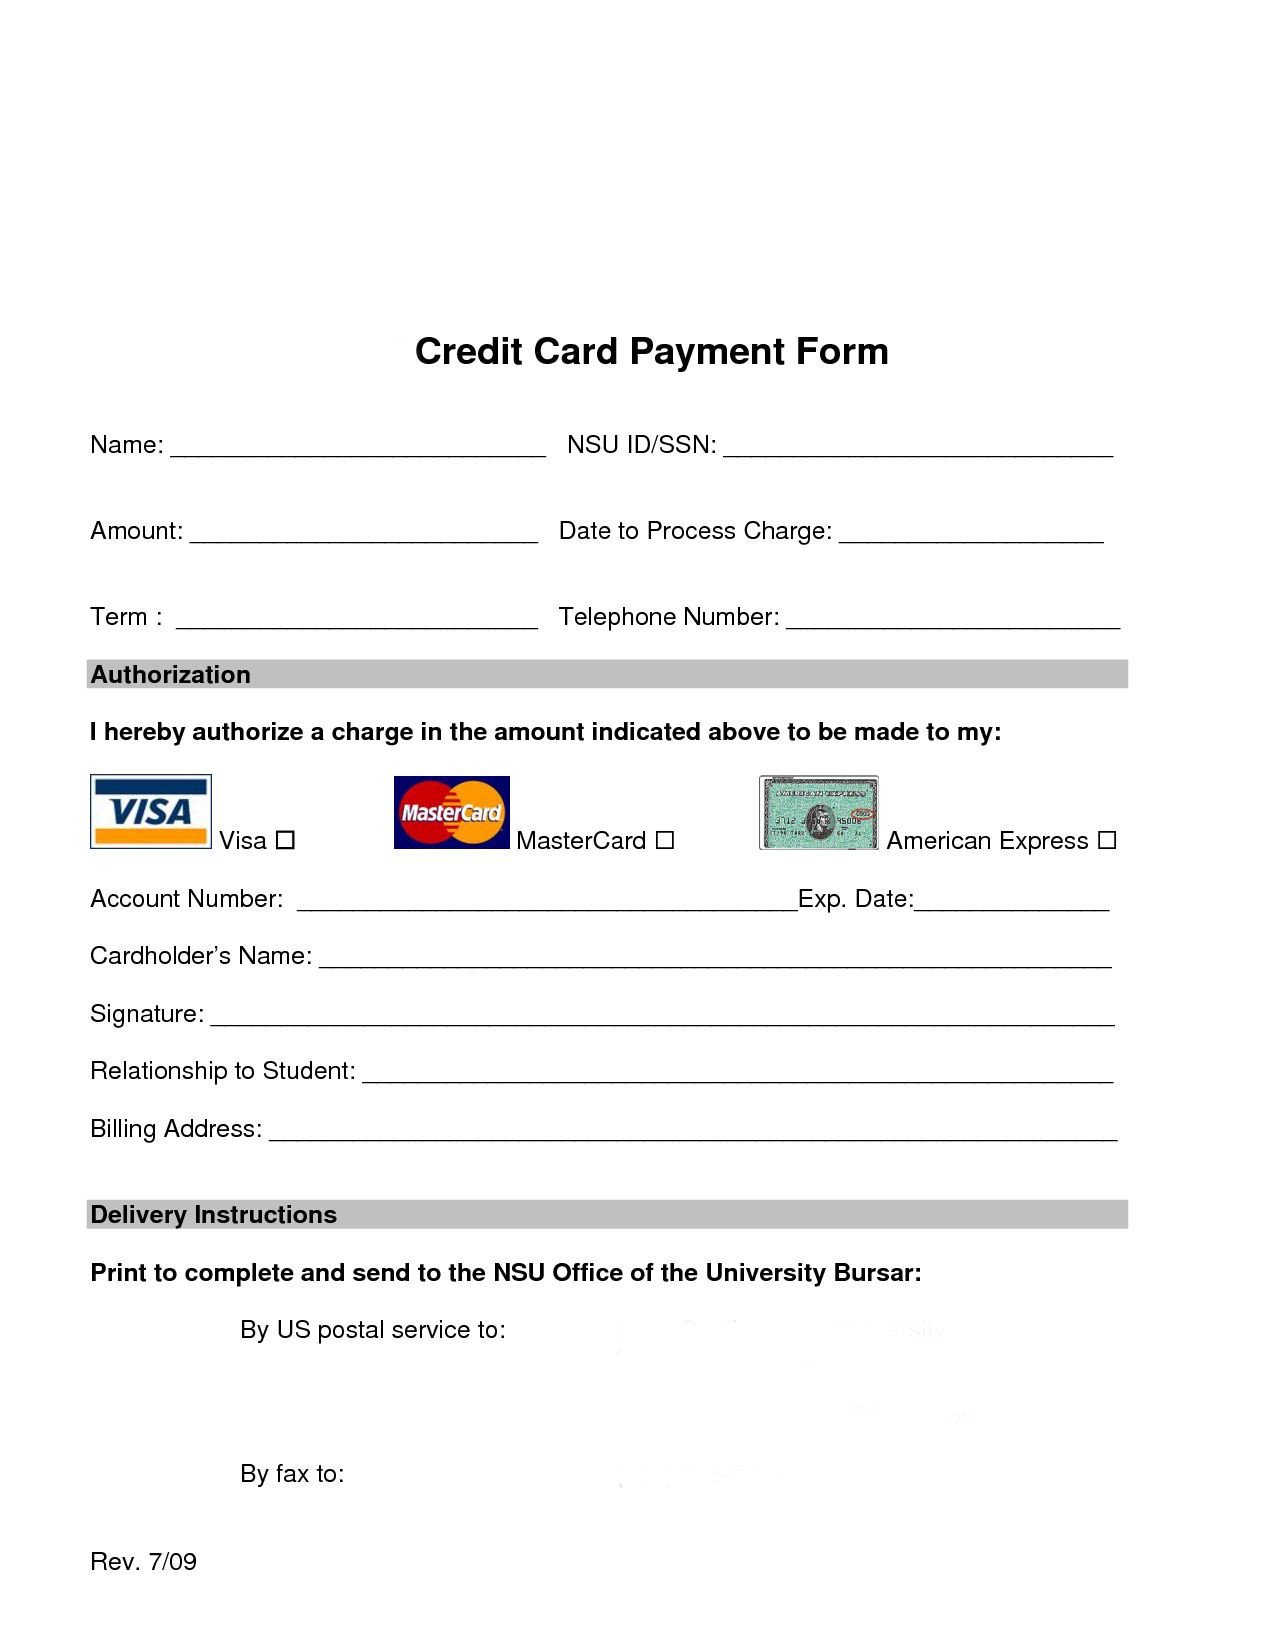 Credit Card Processing form Web Design